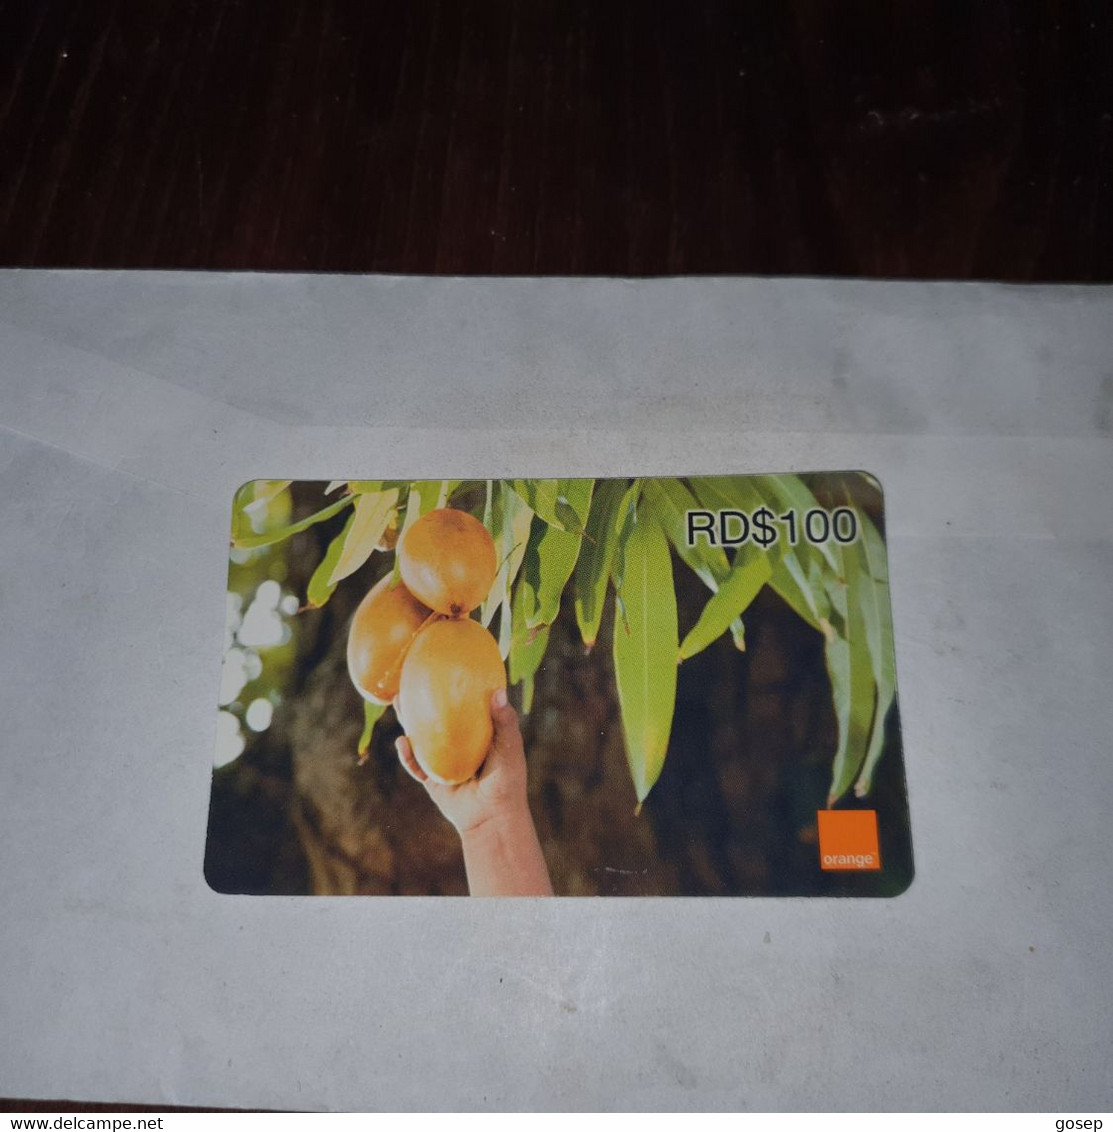 Dominicana-(orange-28rd$100)-(1586-1263-0980-65)-three Mango-(30)-(31.12.2009)-used Card+1card Prepiad Free - Dominicana